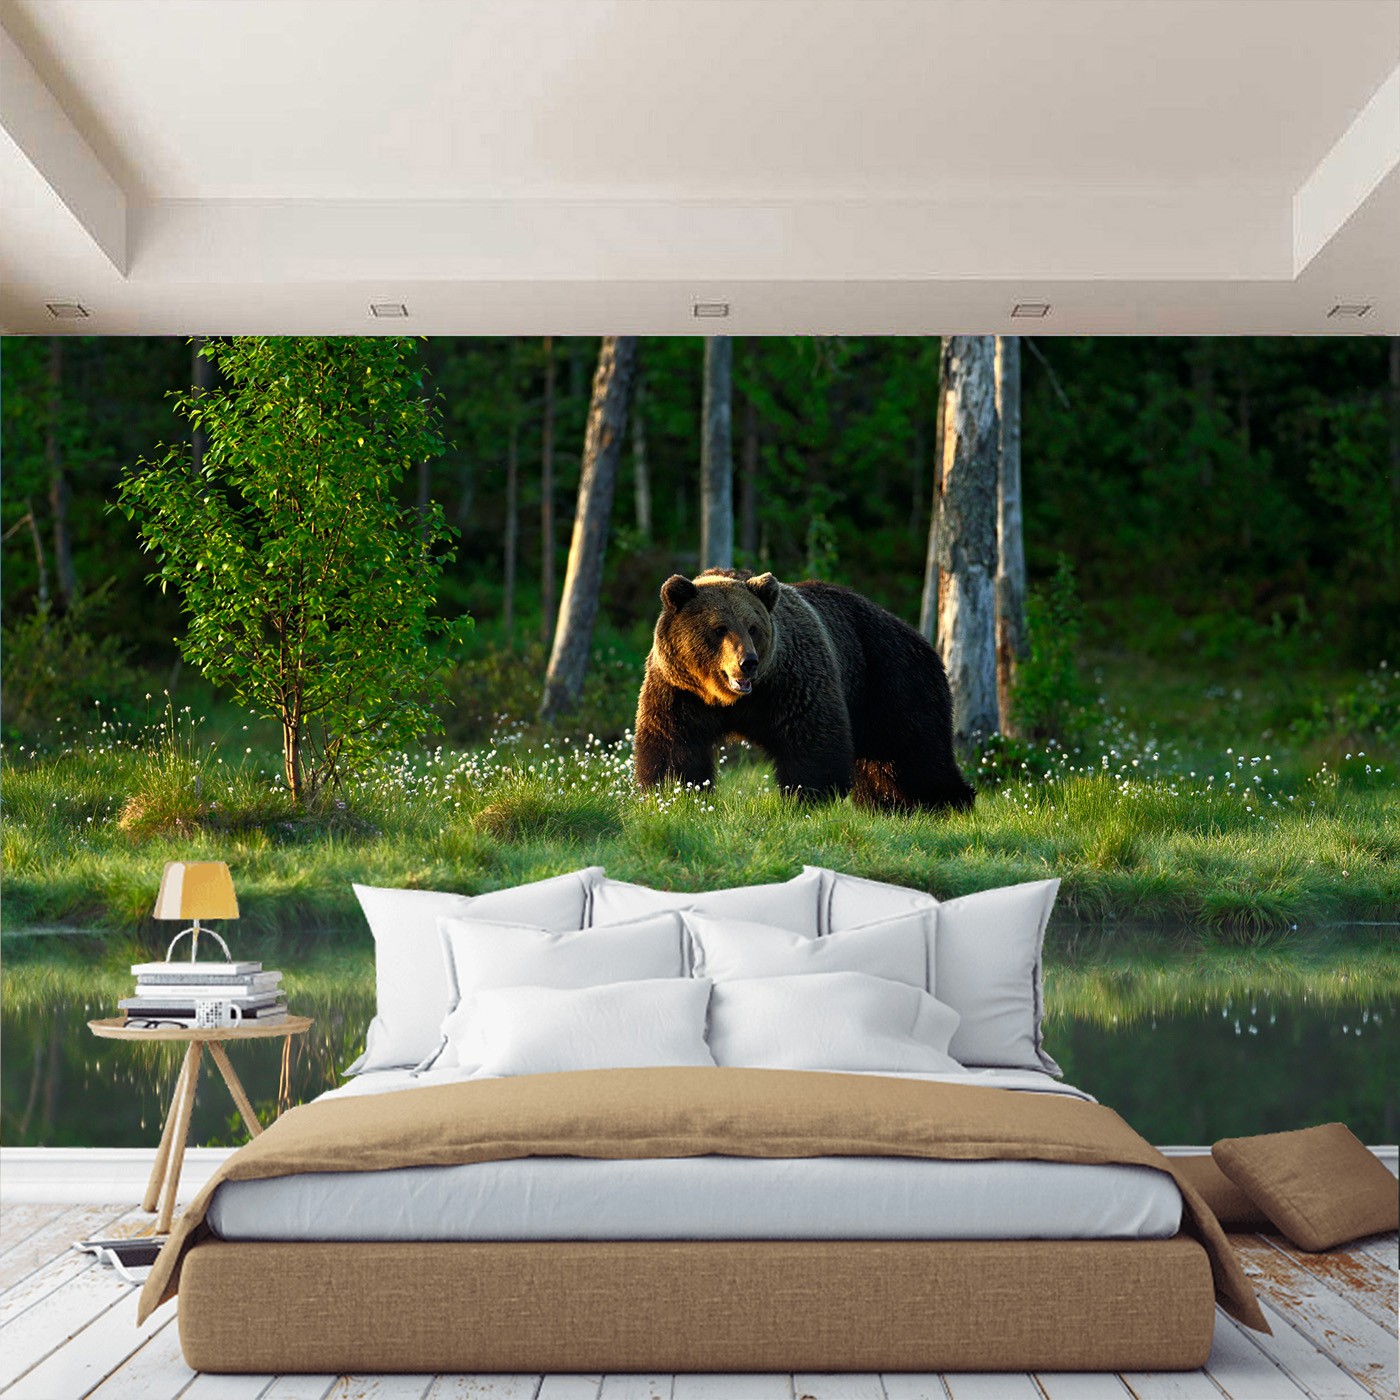 картинка Фотообои бурый медведь в лесу возле рекиот интернет-магазина Фотомили